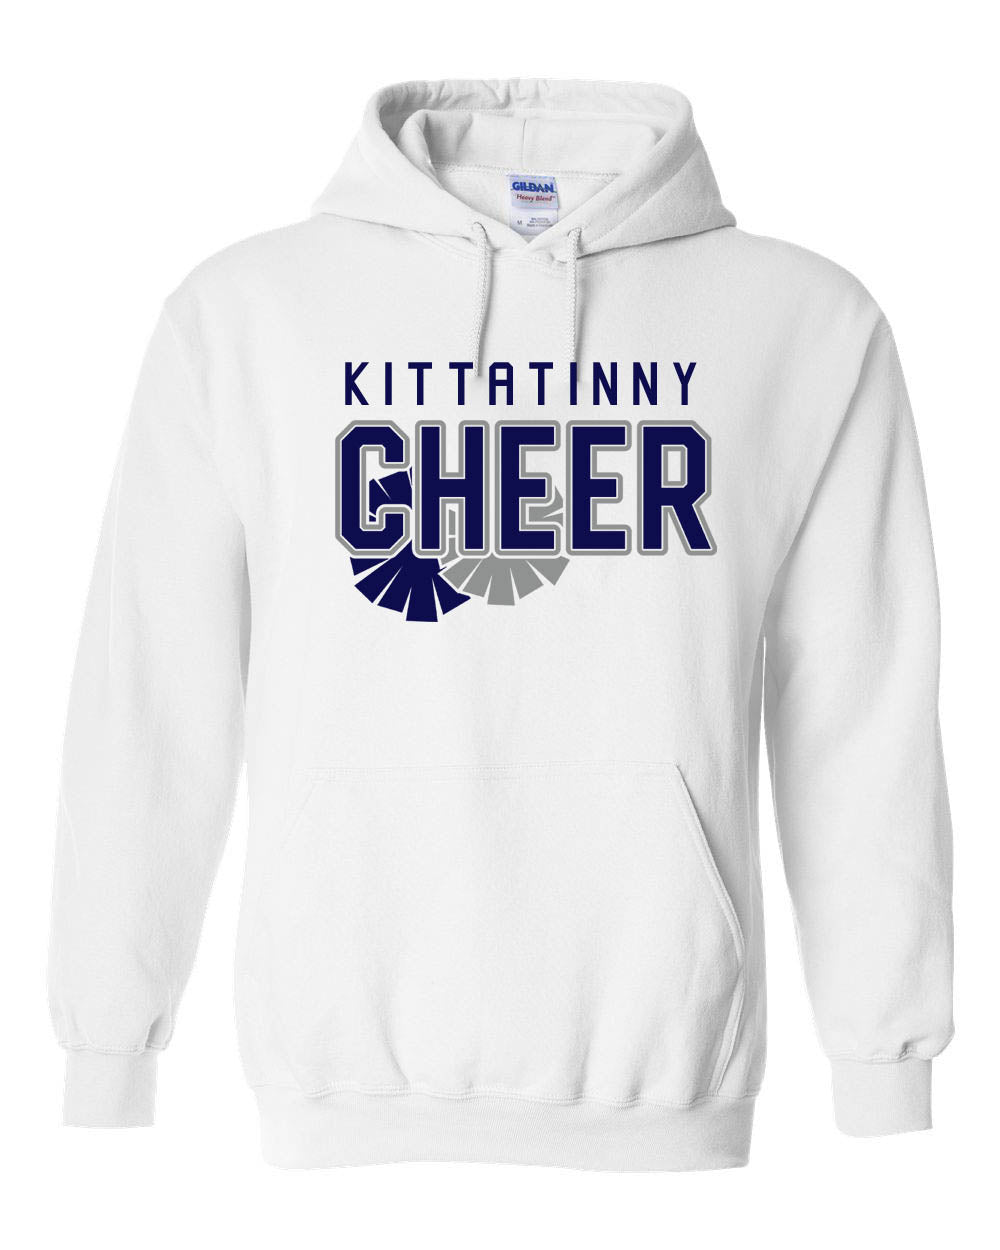 Kittatinny Cheer Design 4 Hooded Sweatshirt